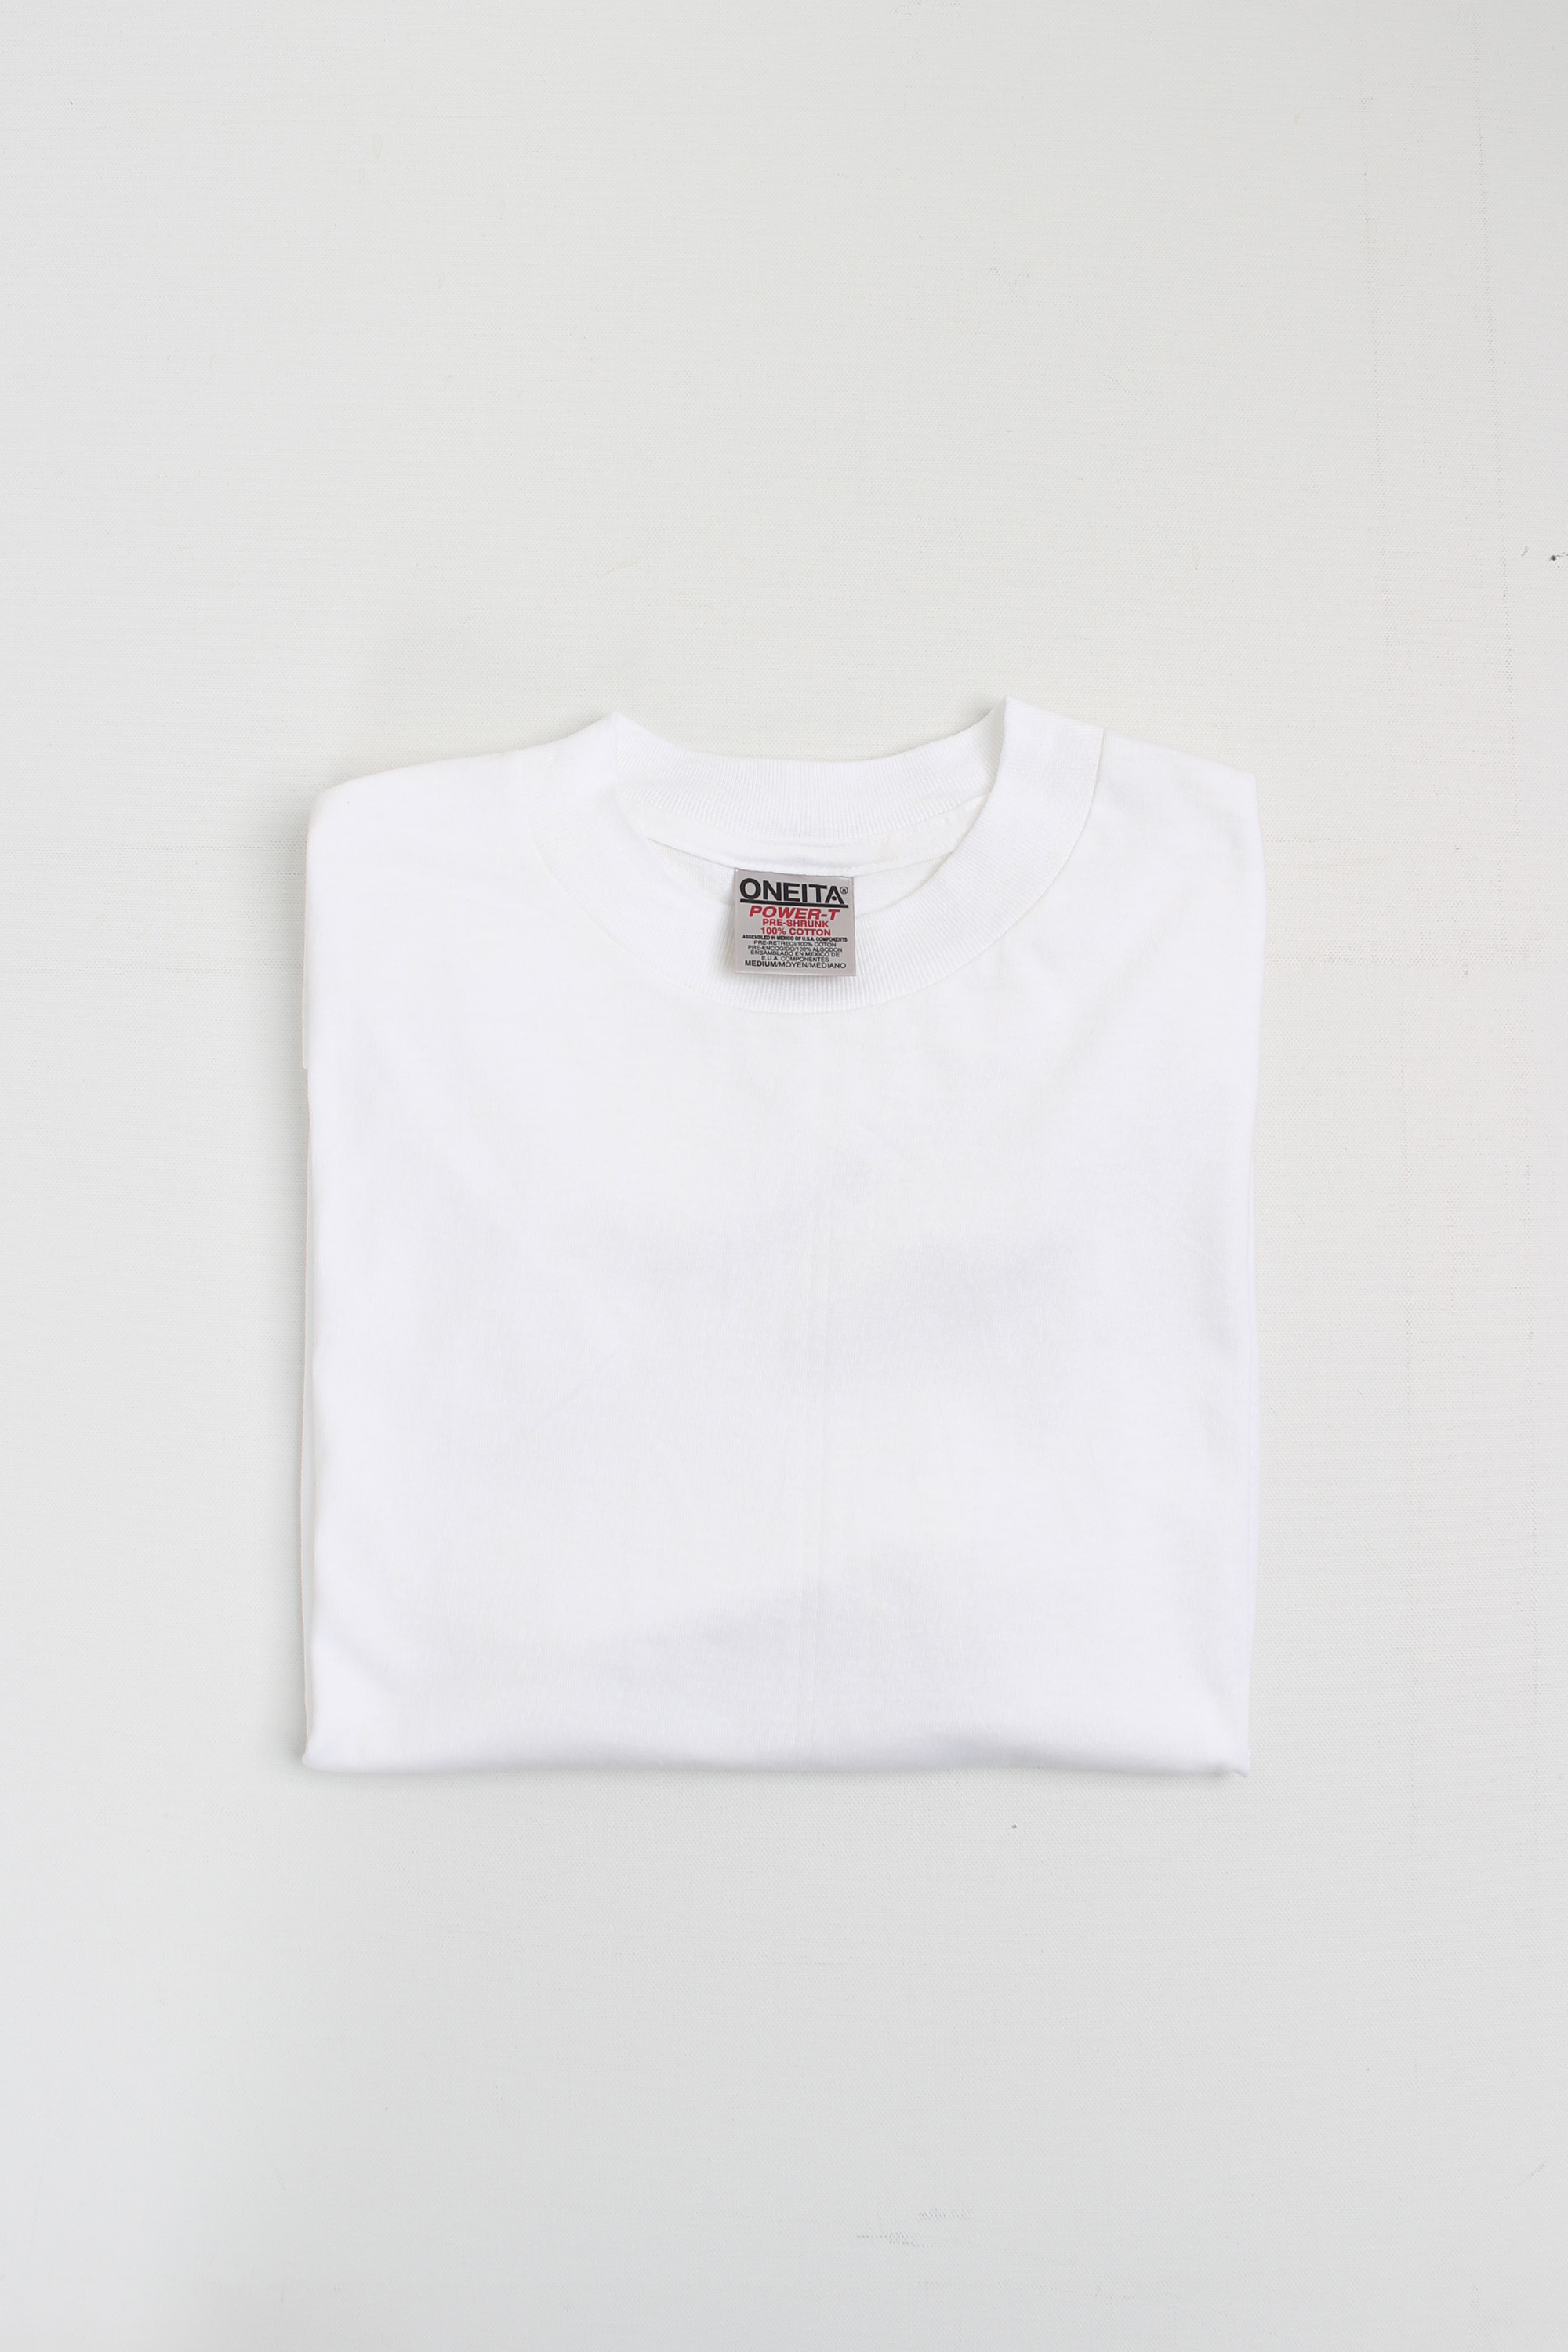 90s ONEITA blank t-shirt